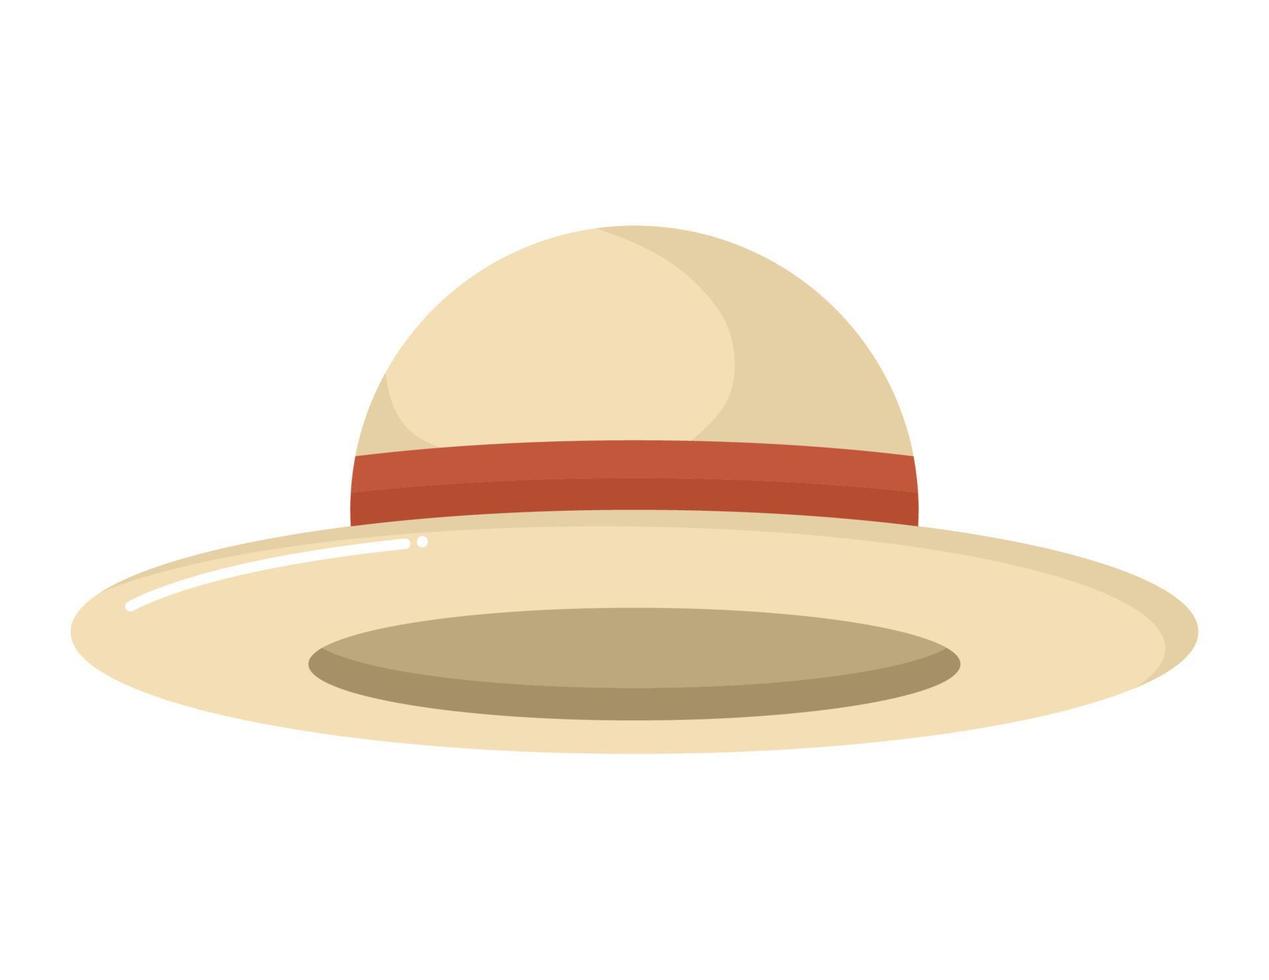 travel hat design vector